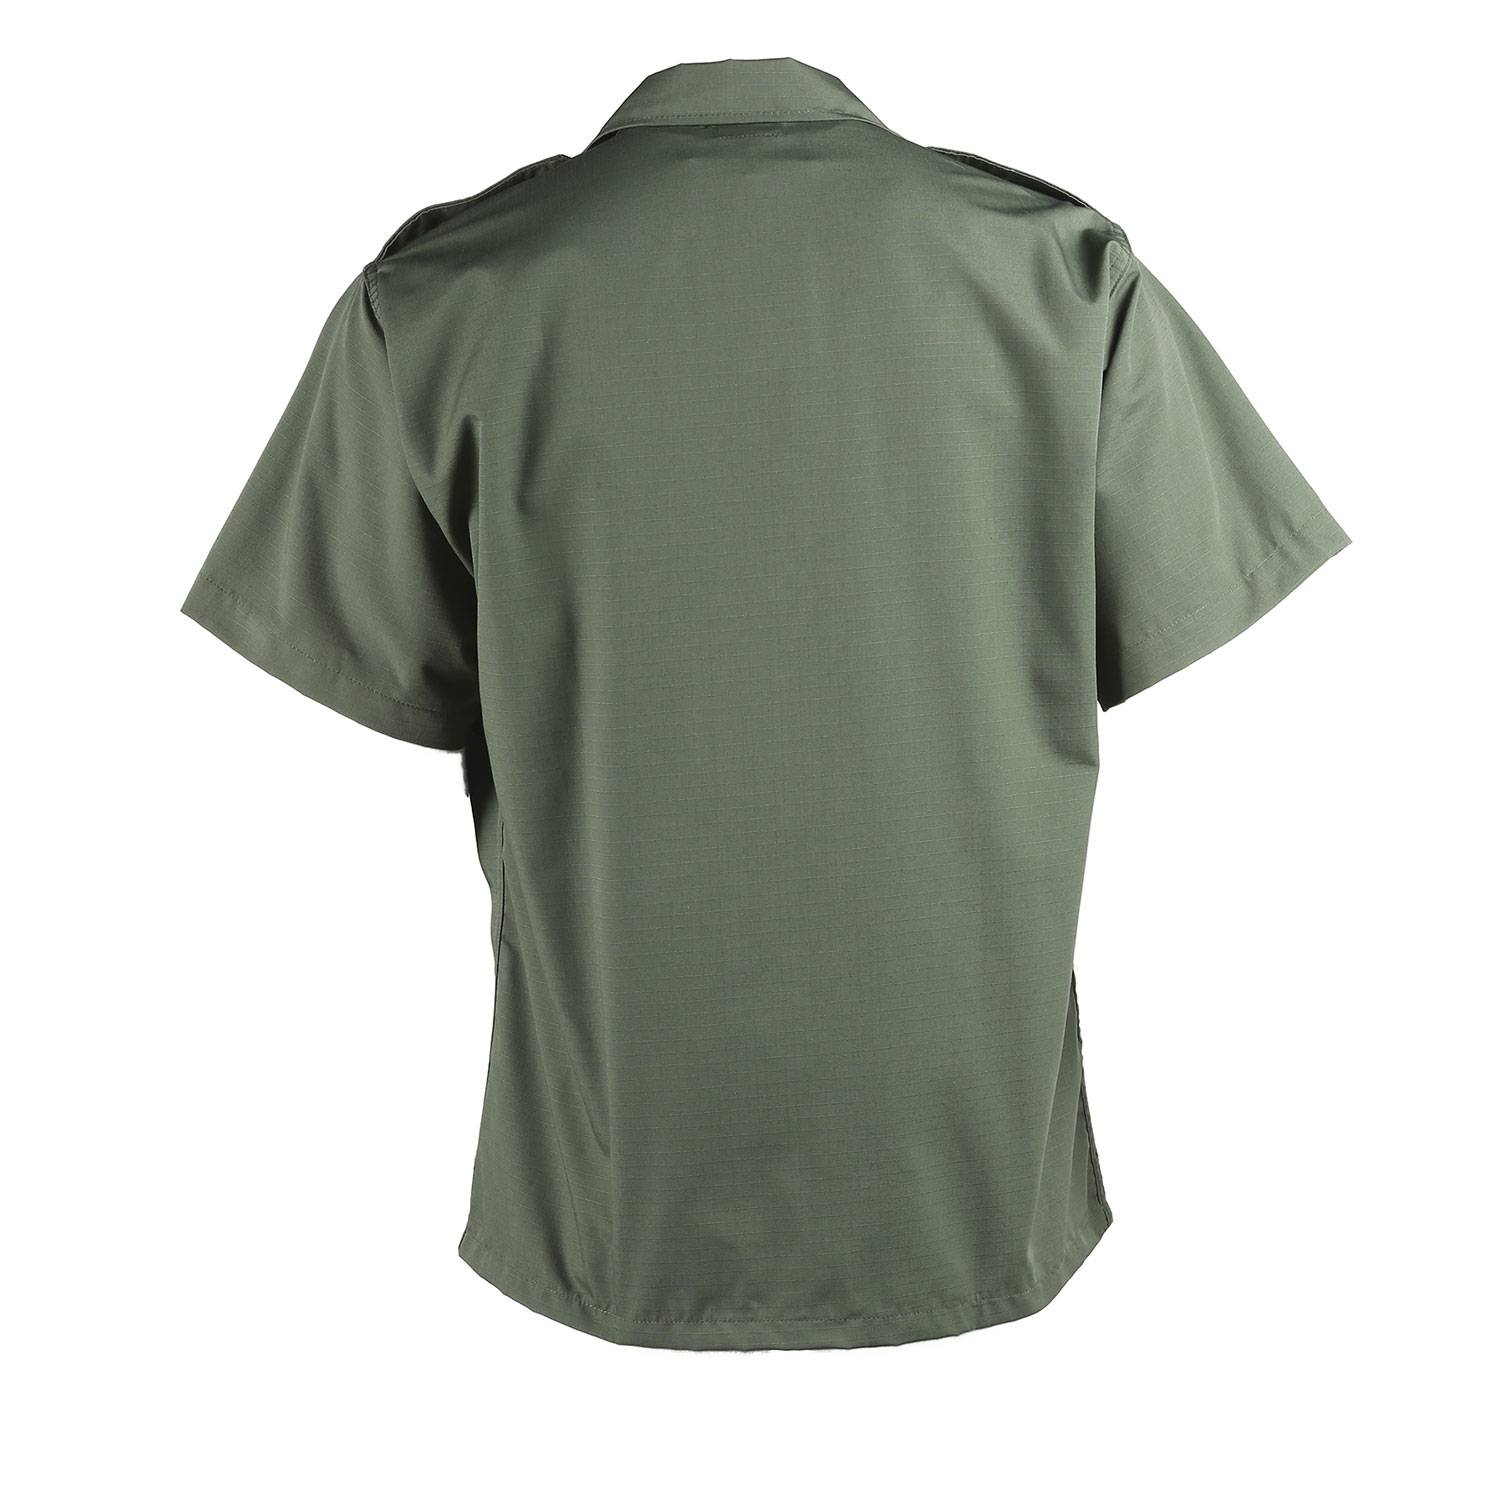 Galls Short Sleeve Poly Cotton Ripstop BDU Shirt